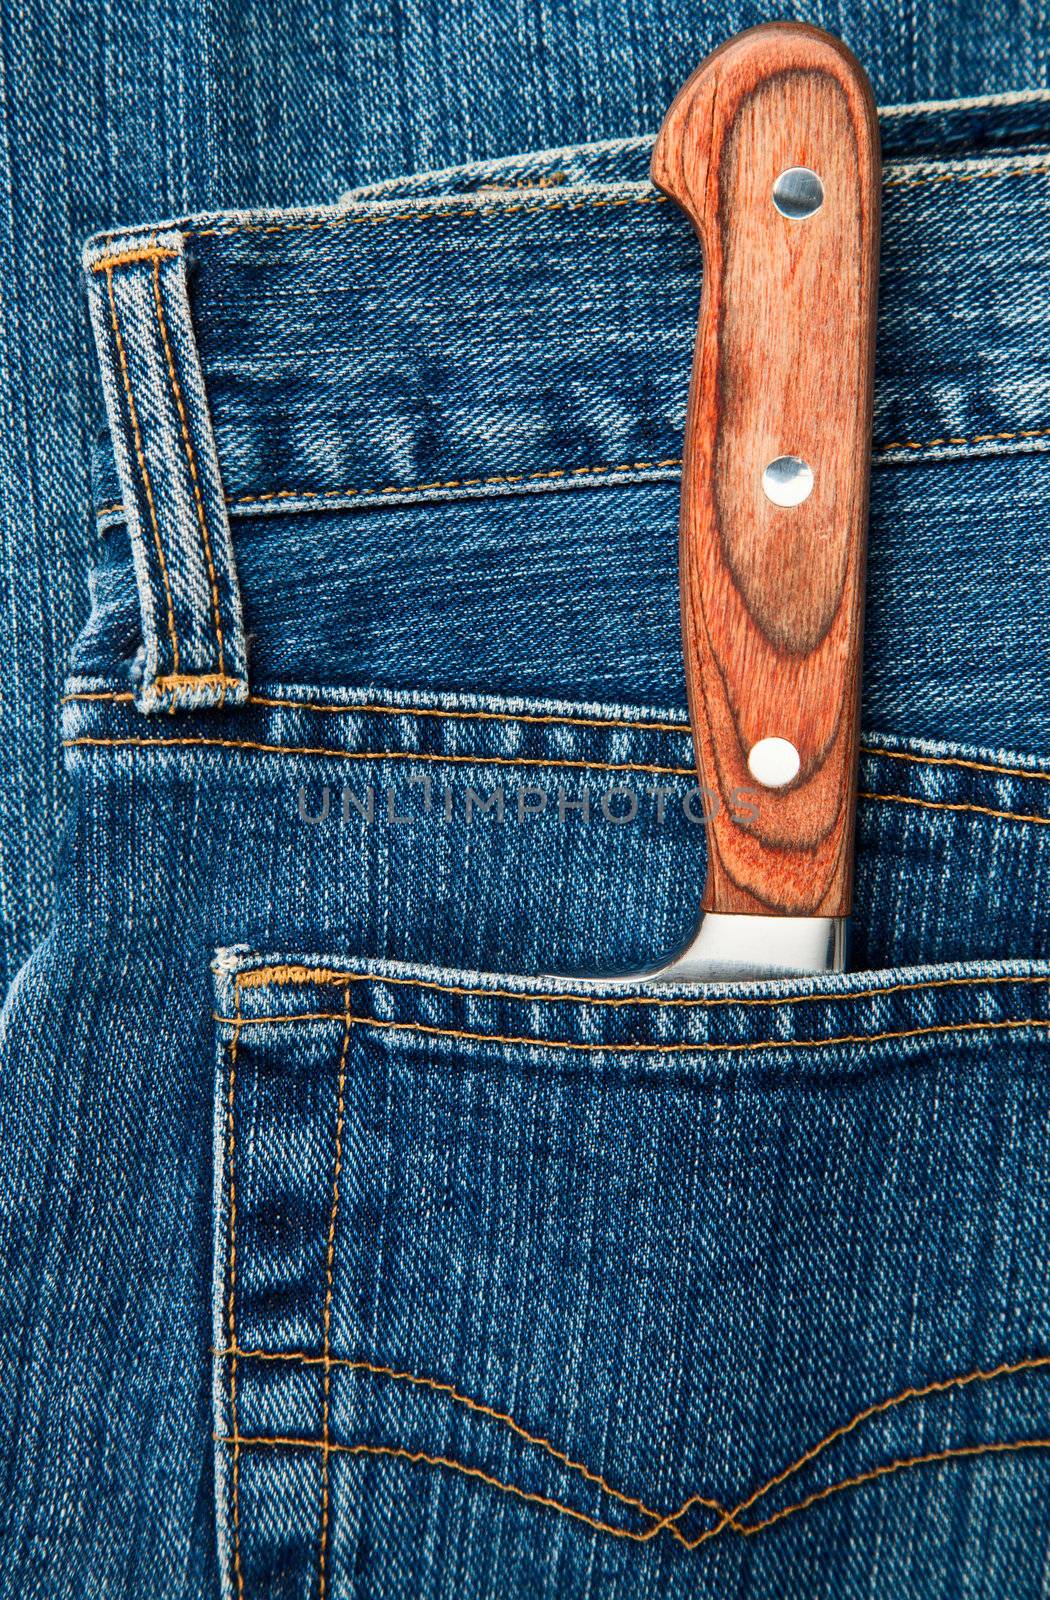 Blue jeans pocket with kitchen knife